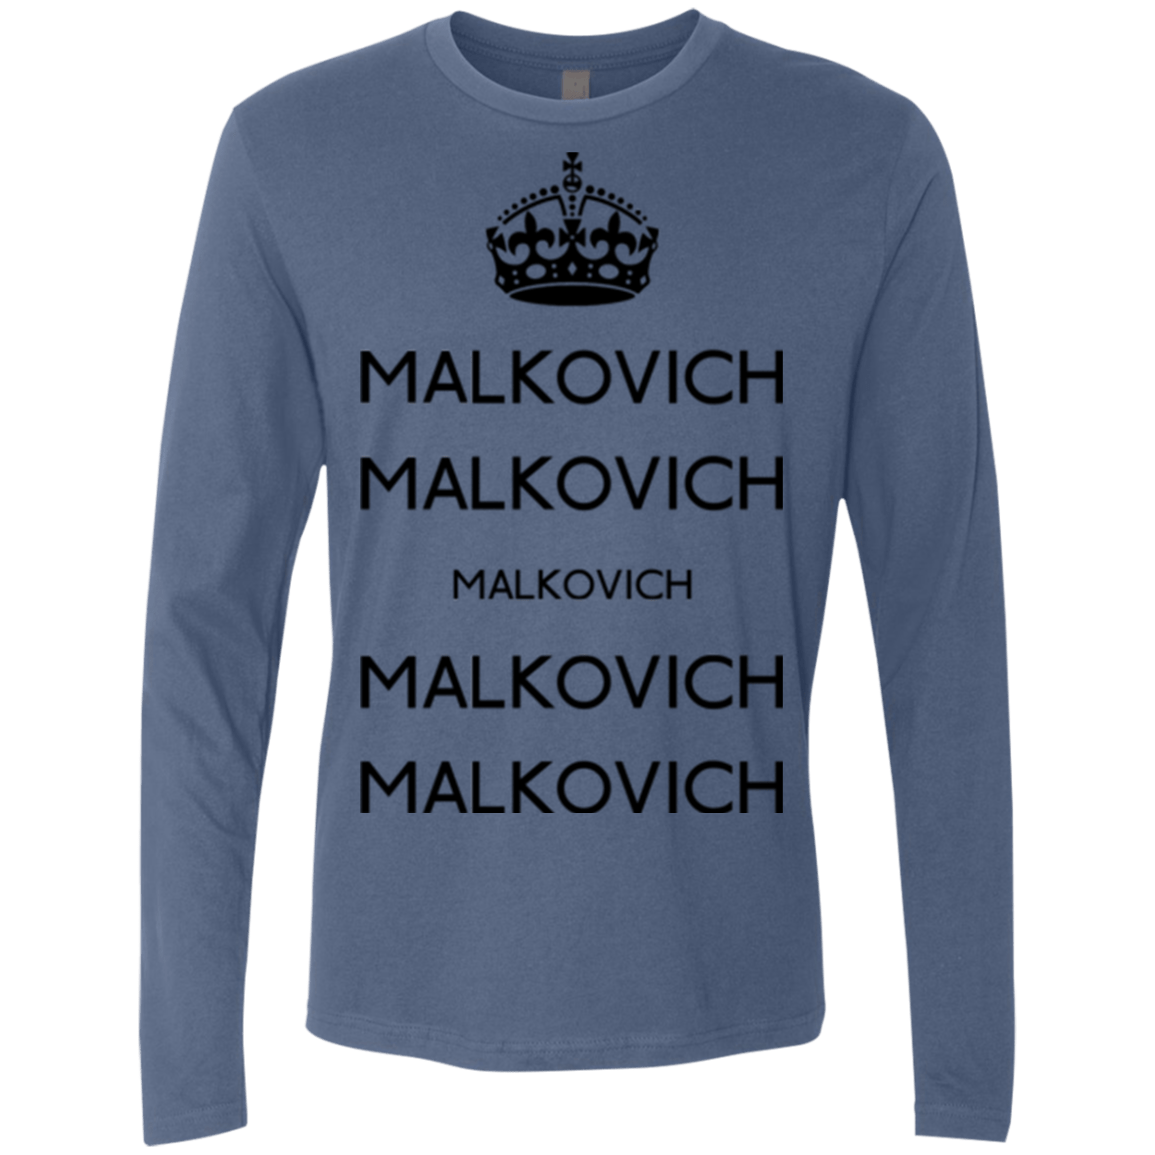 Keep Calm Malkovich Men's Premium Long Sleeve